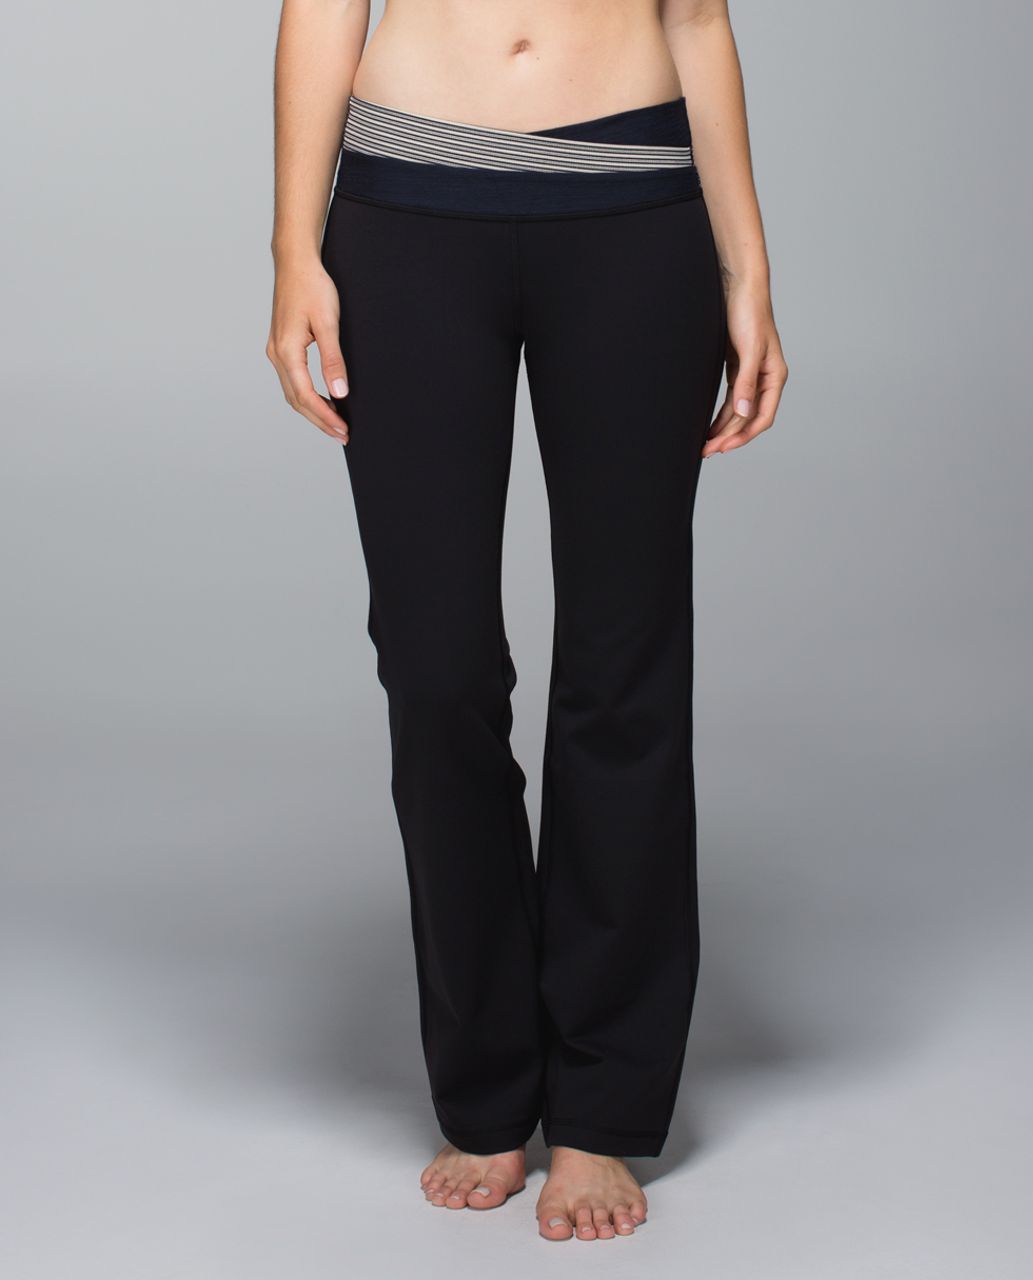 Lululemon Astro Pant (Regular) - Black Swan / Sweater Knit Print